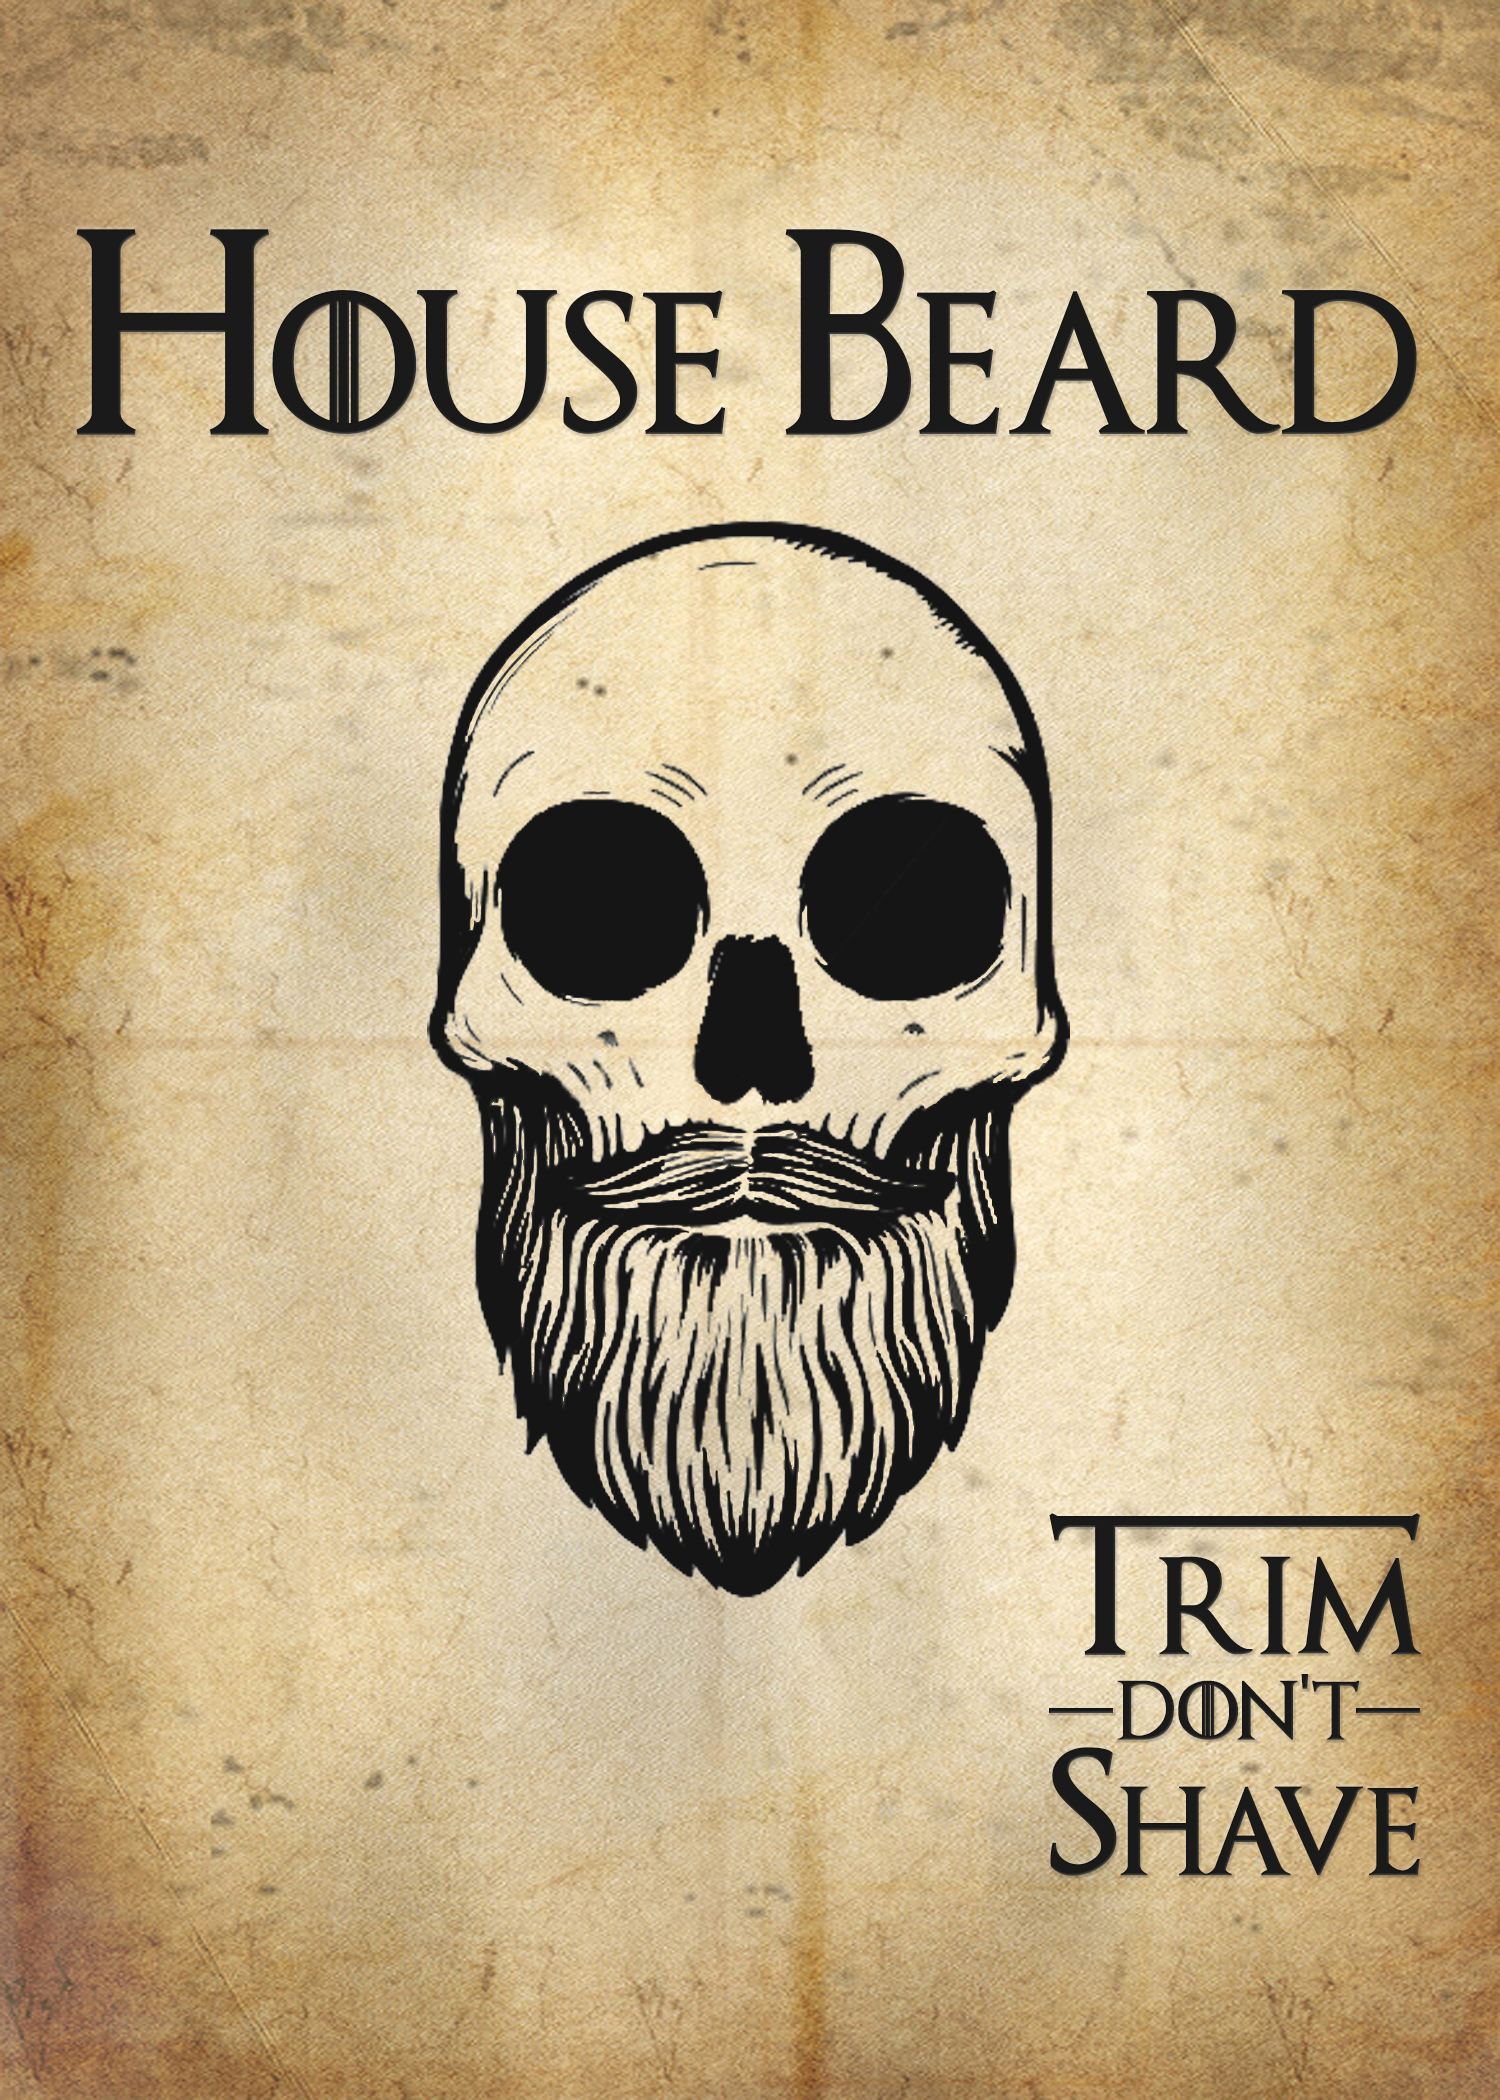 House Beard sigil